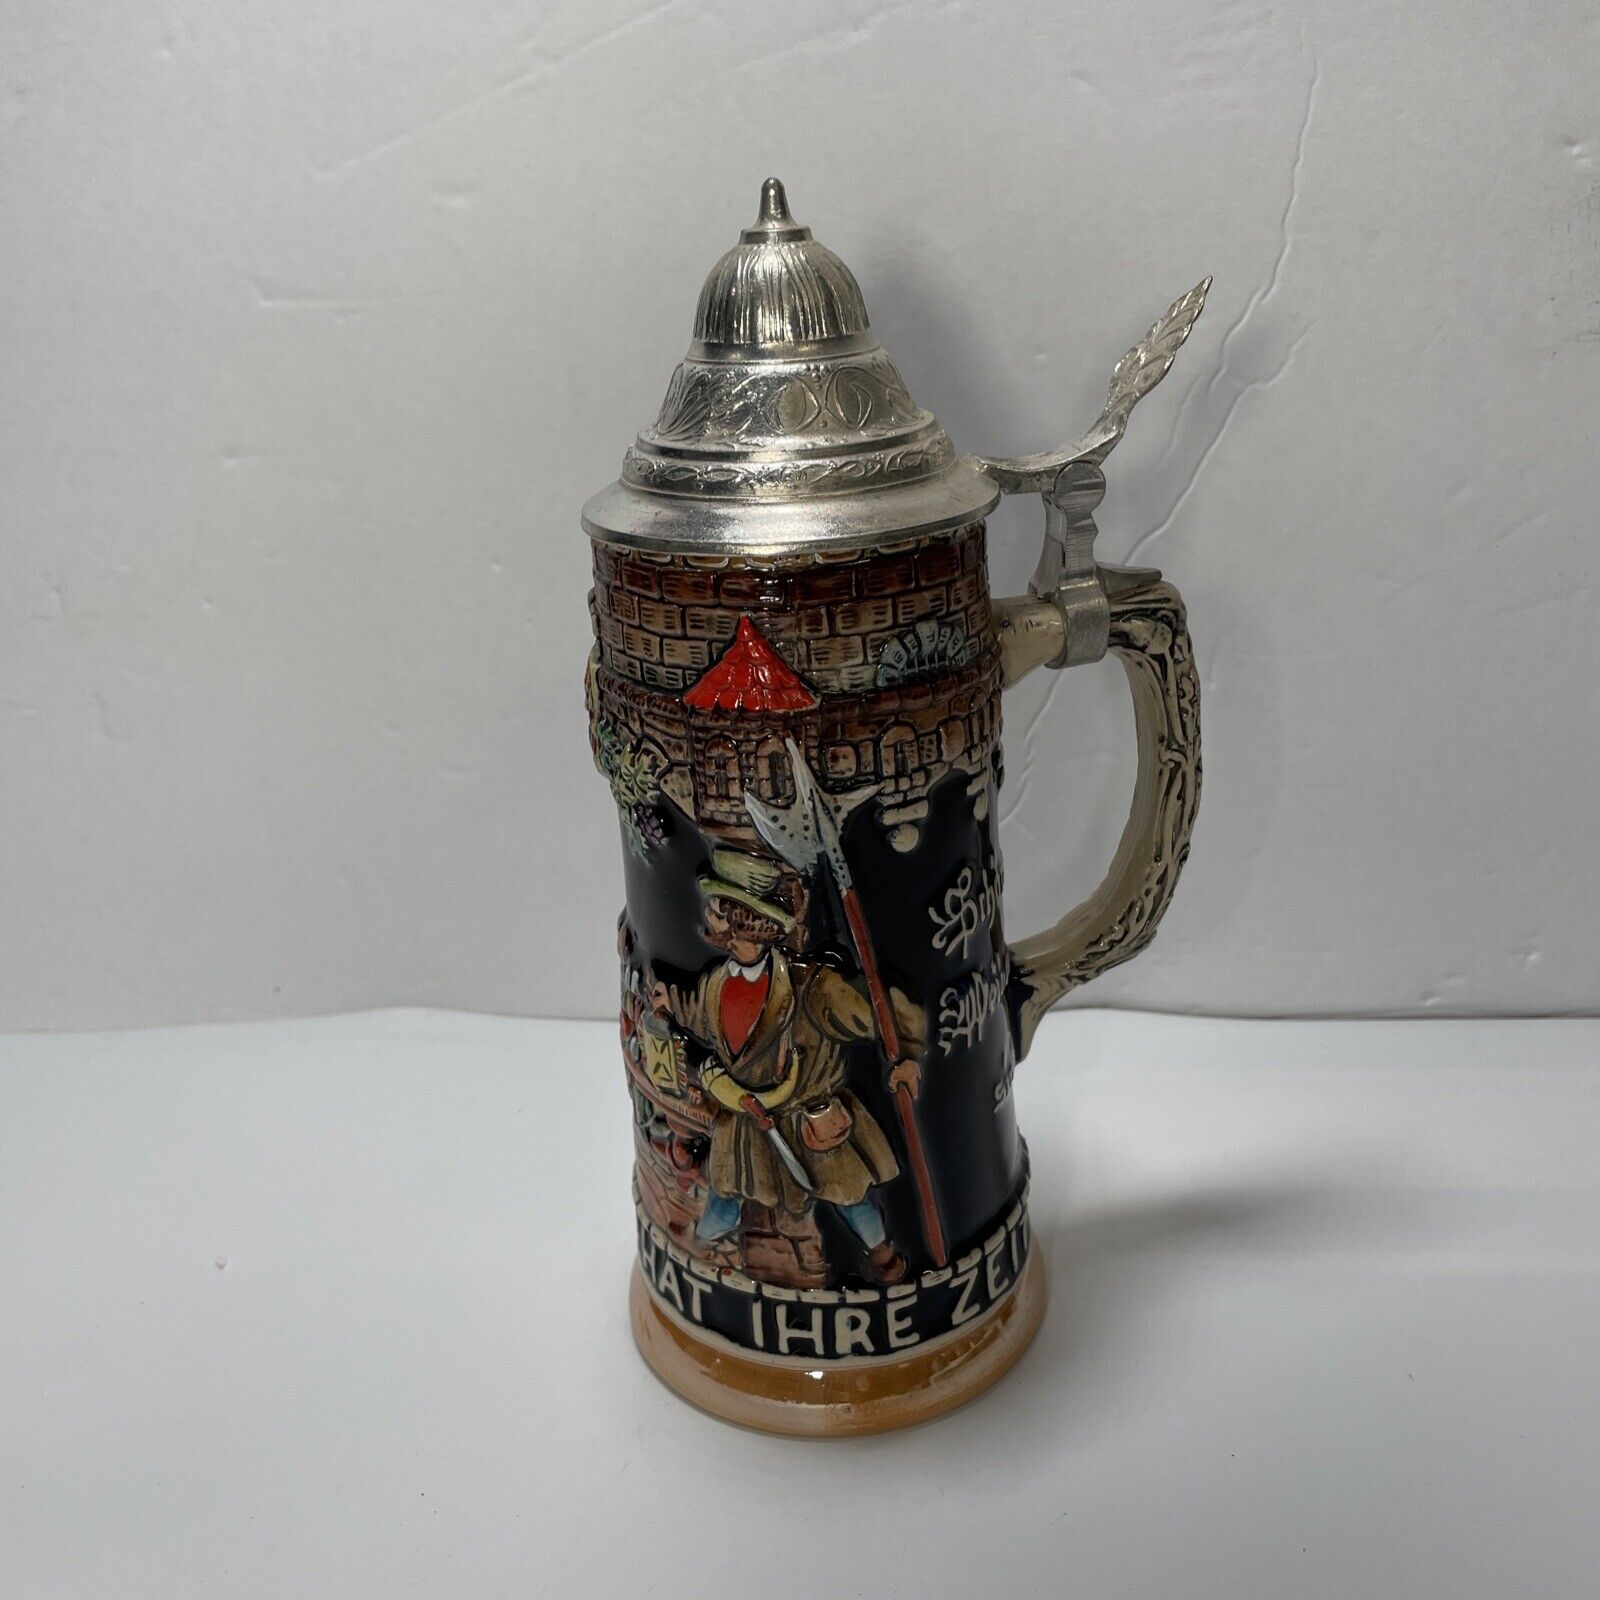 Vintage German Beer Stein Mug Ceramic Original Gerzit Lidded Hand Painted NOS